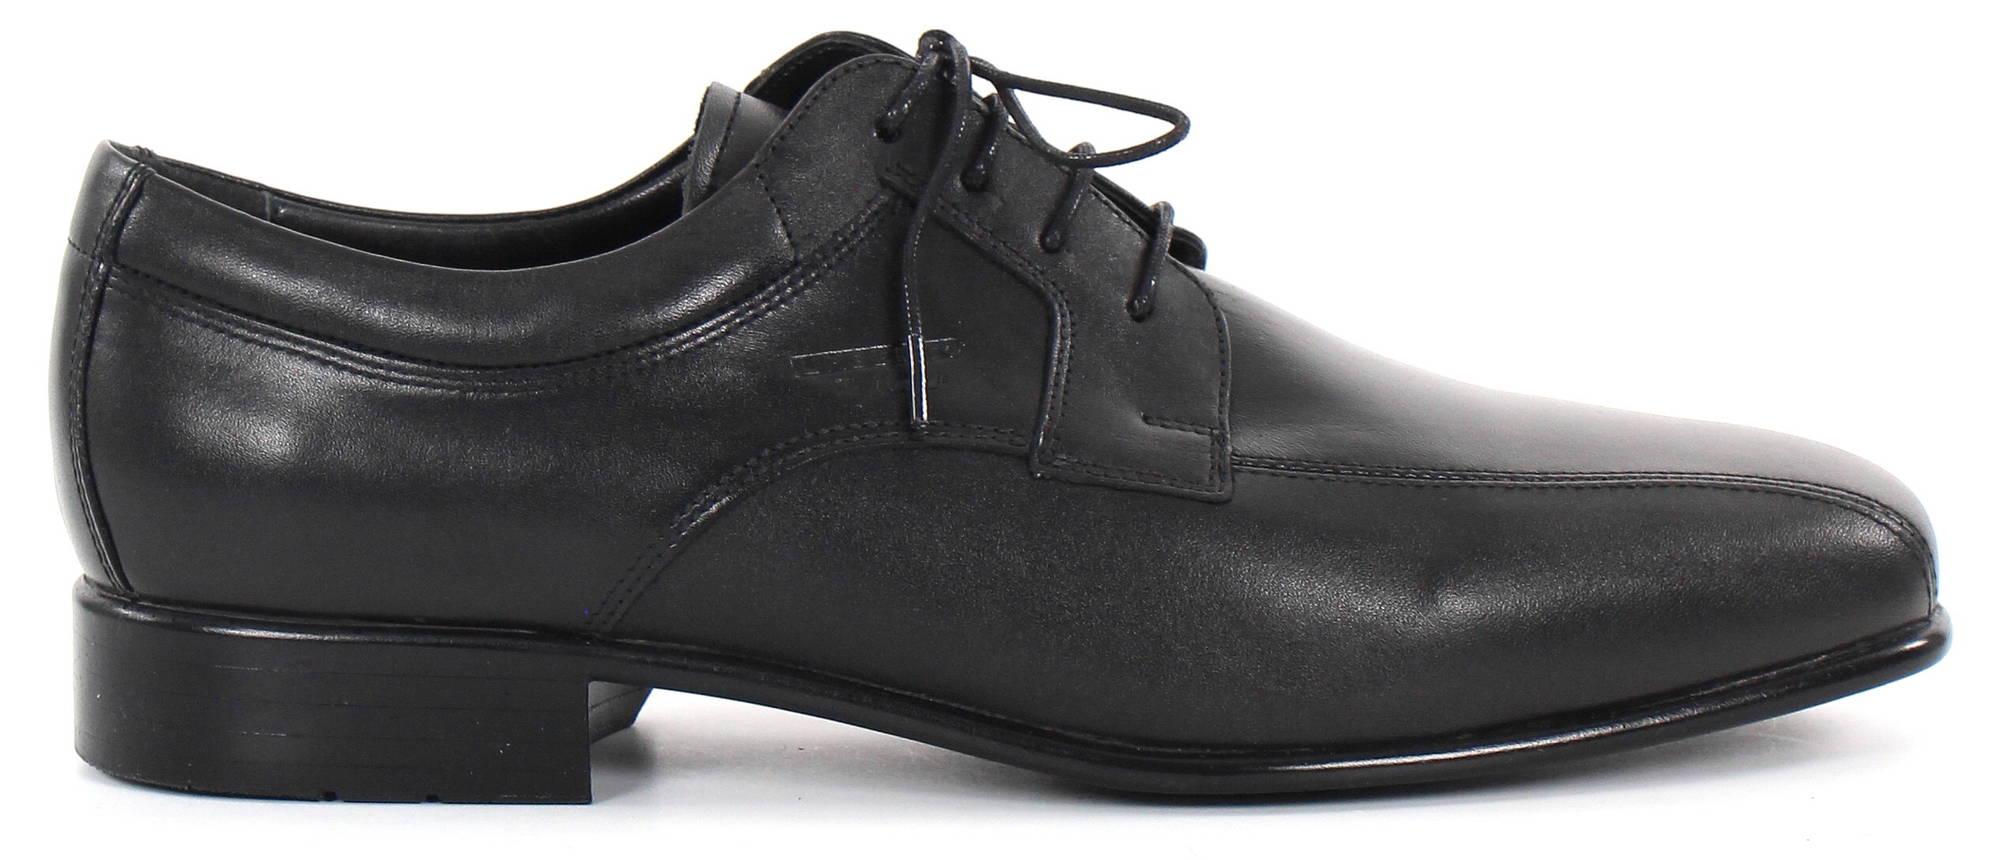 Umberto Dress Shoes 5578, Black - Stilettoshop.eu webstore